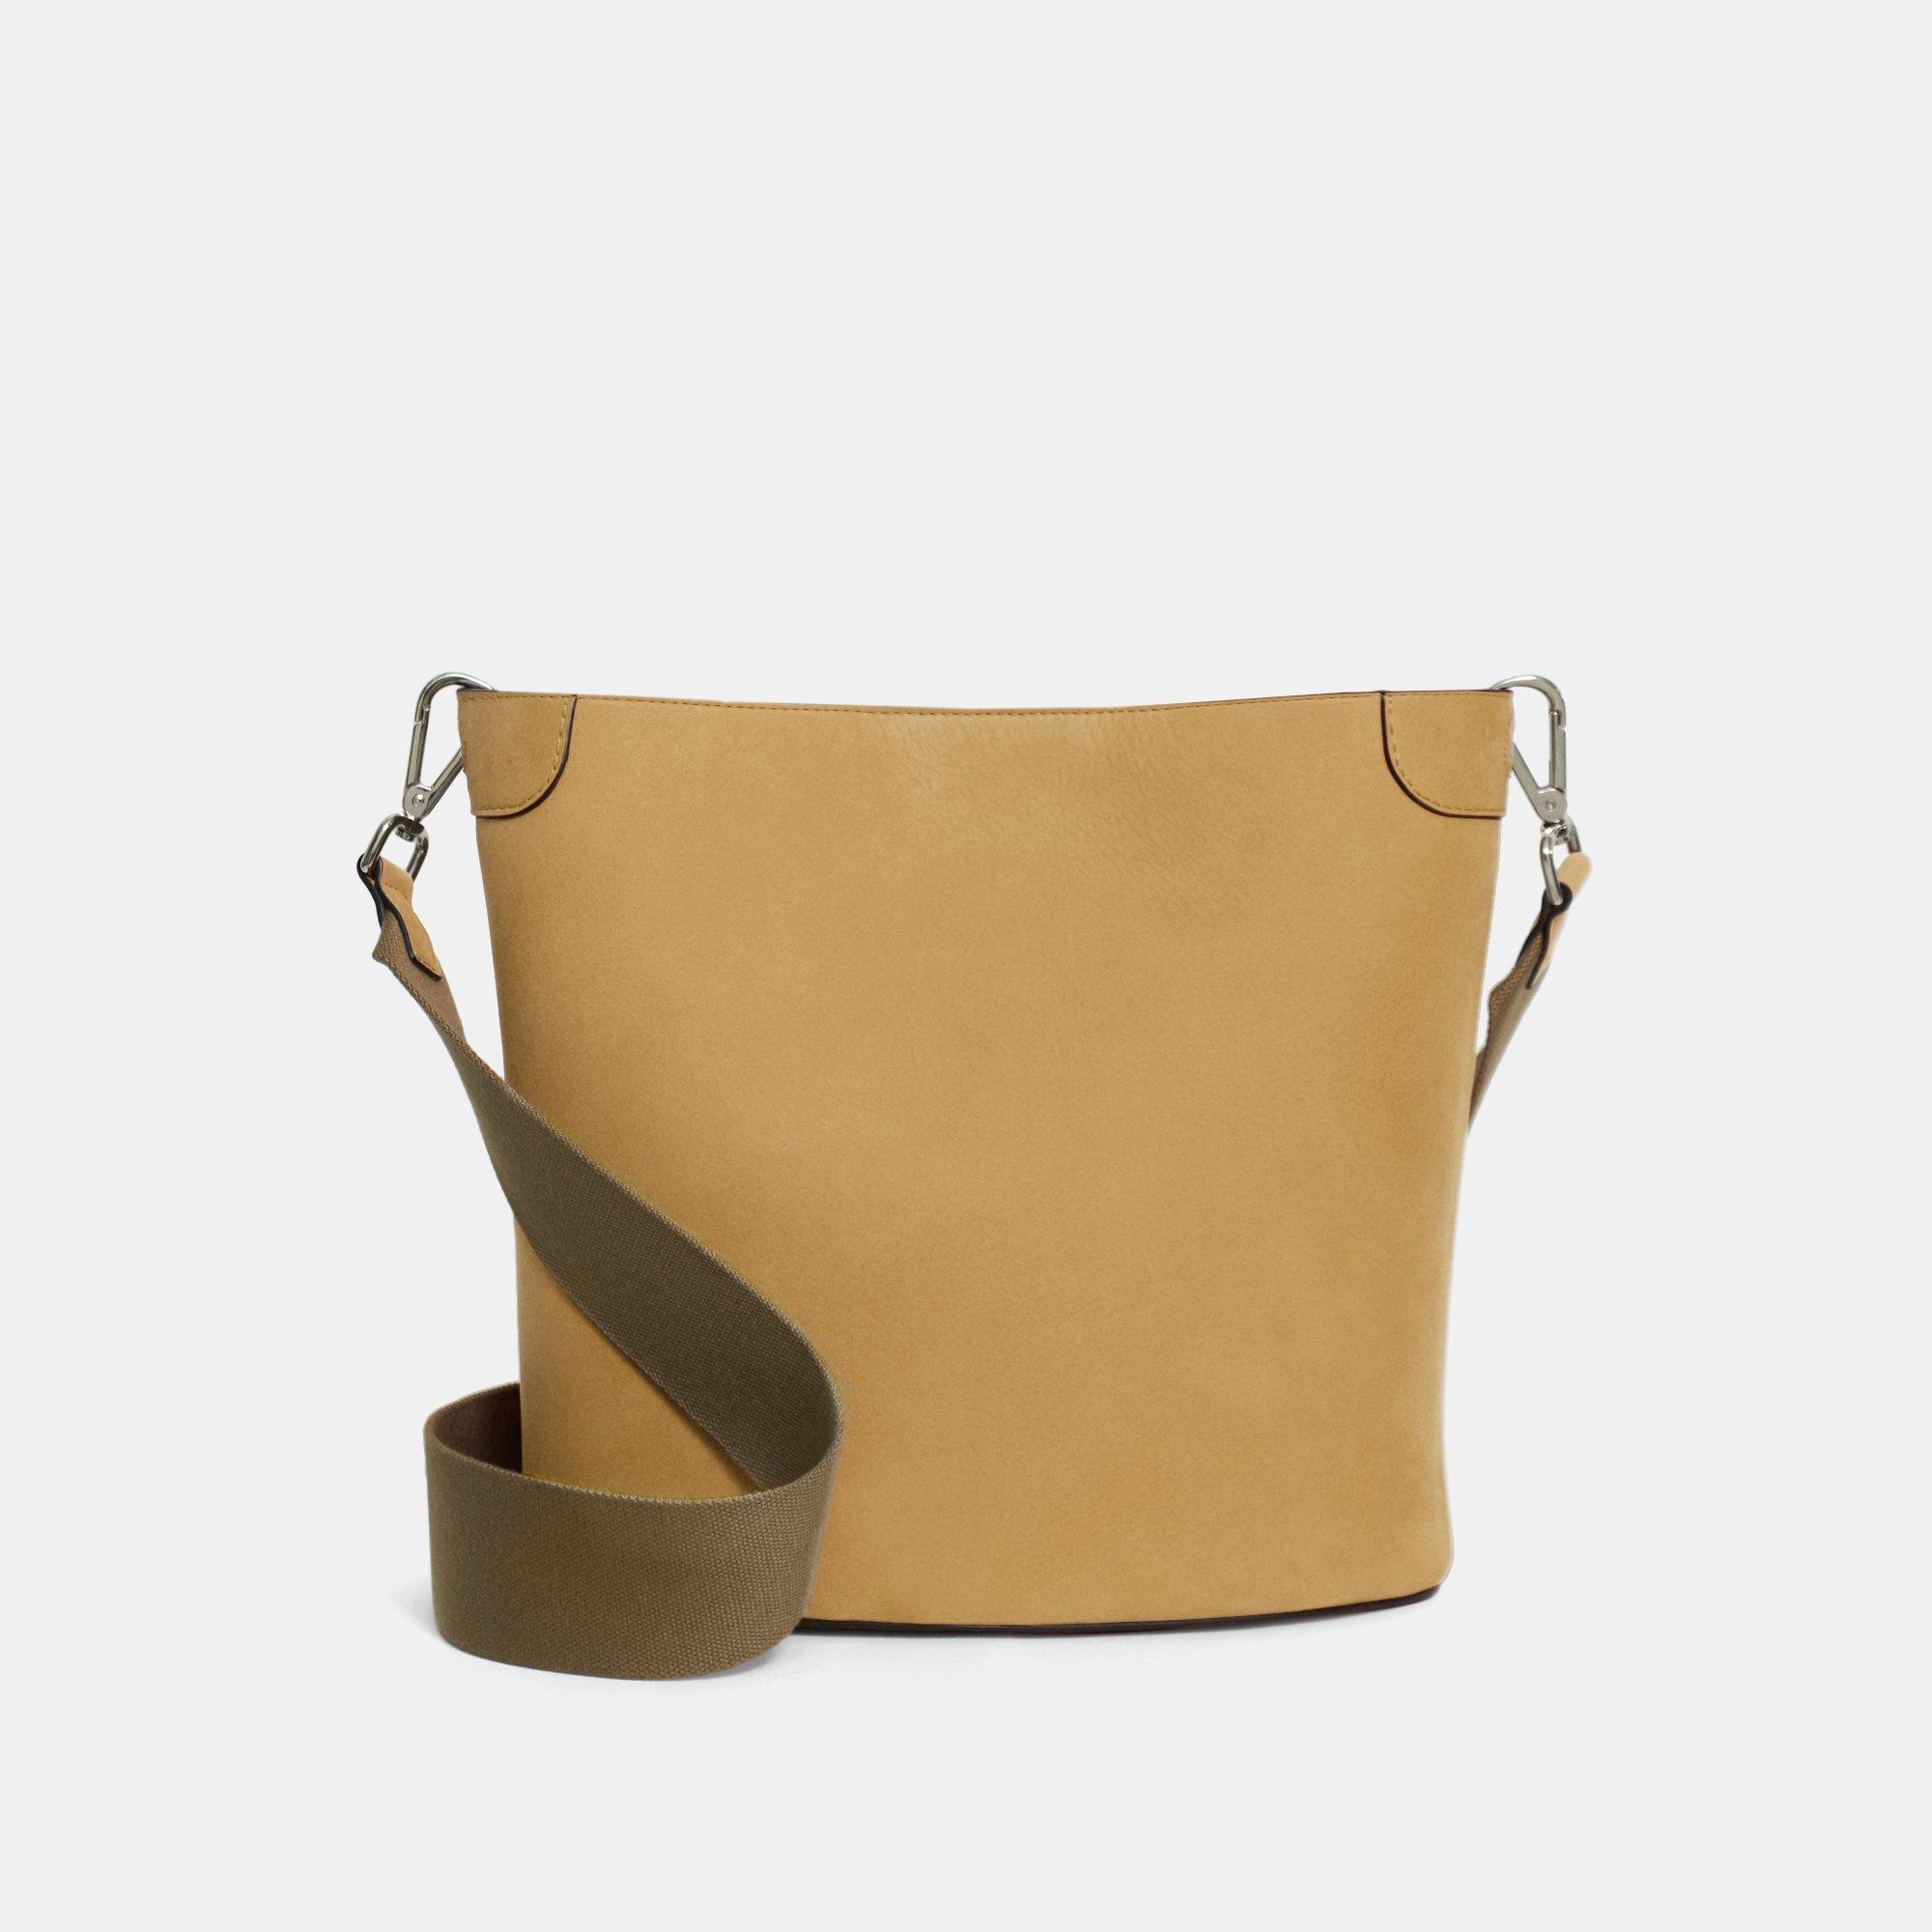 Theory Bucket Bag in Nubuck Leather